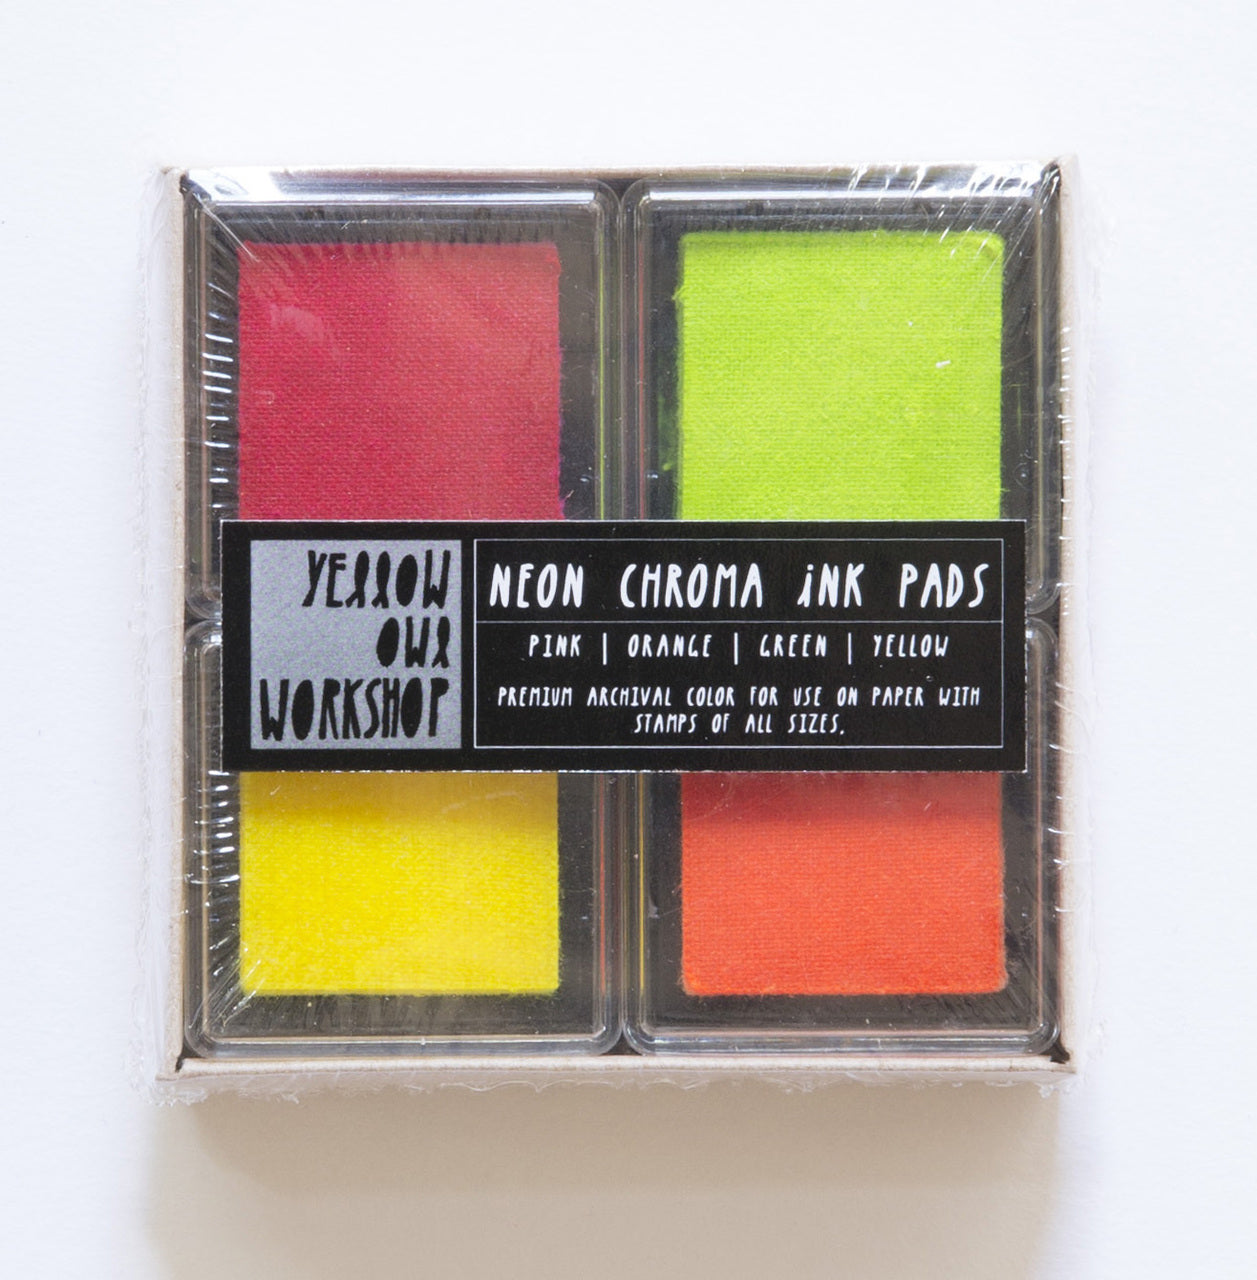 Neon Chroma Ink Pad Set - Pink, Orange, Green, Yellow - Yellow Owl Workshop